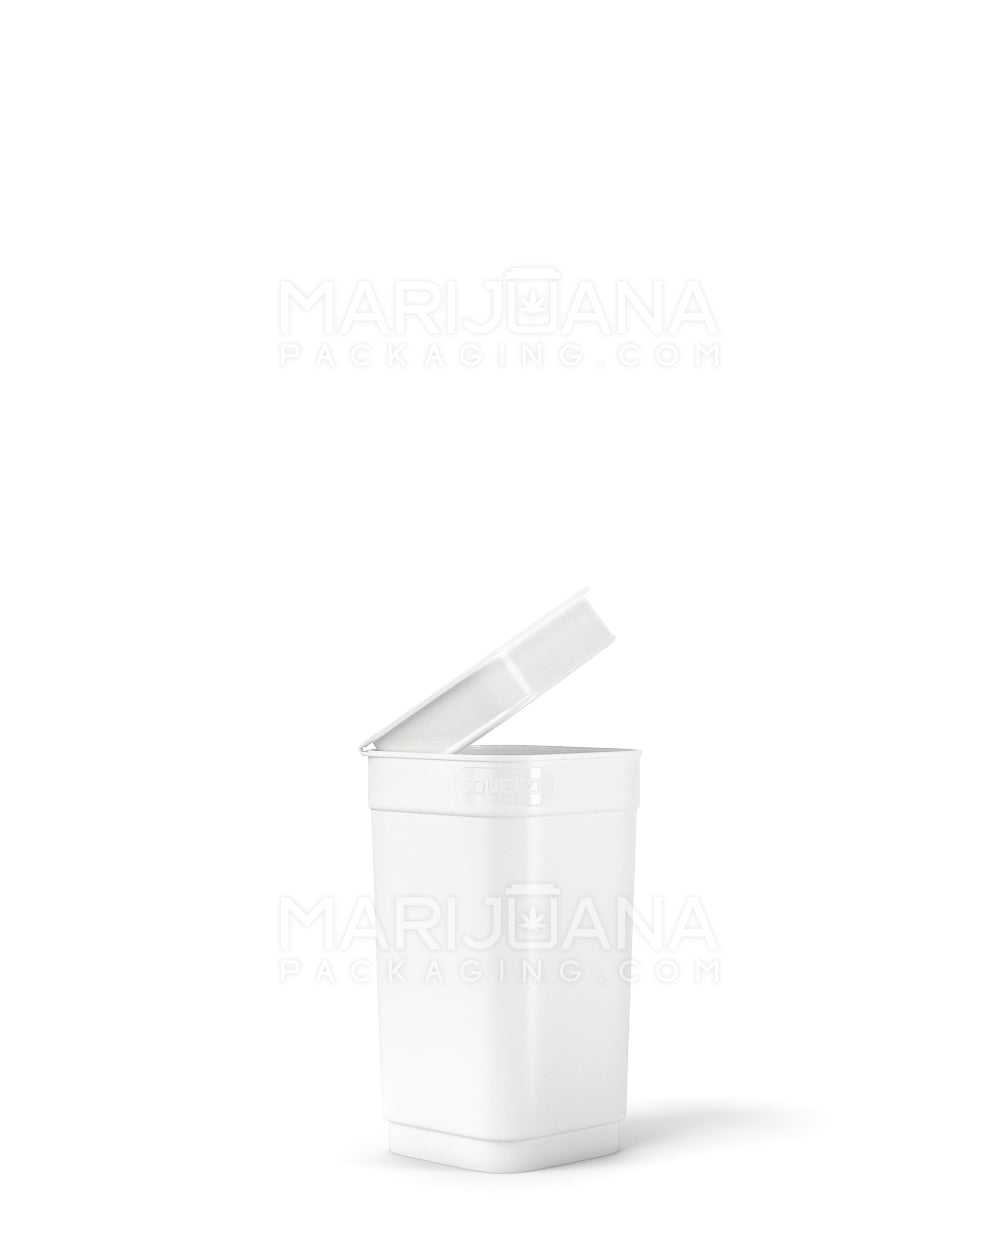 POLLEN GEAR | Child Resistant 100% Recyclable Opaque White Pop Box Pop Top Bottles | 13dr - 2g - 825 Count